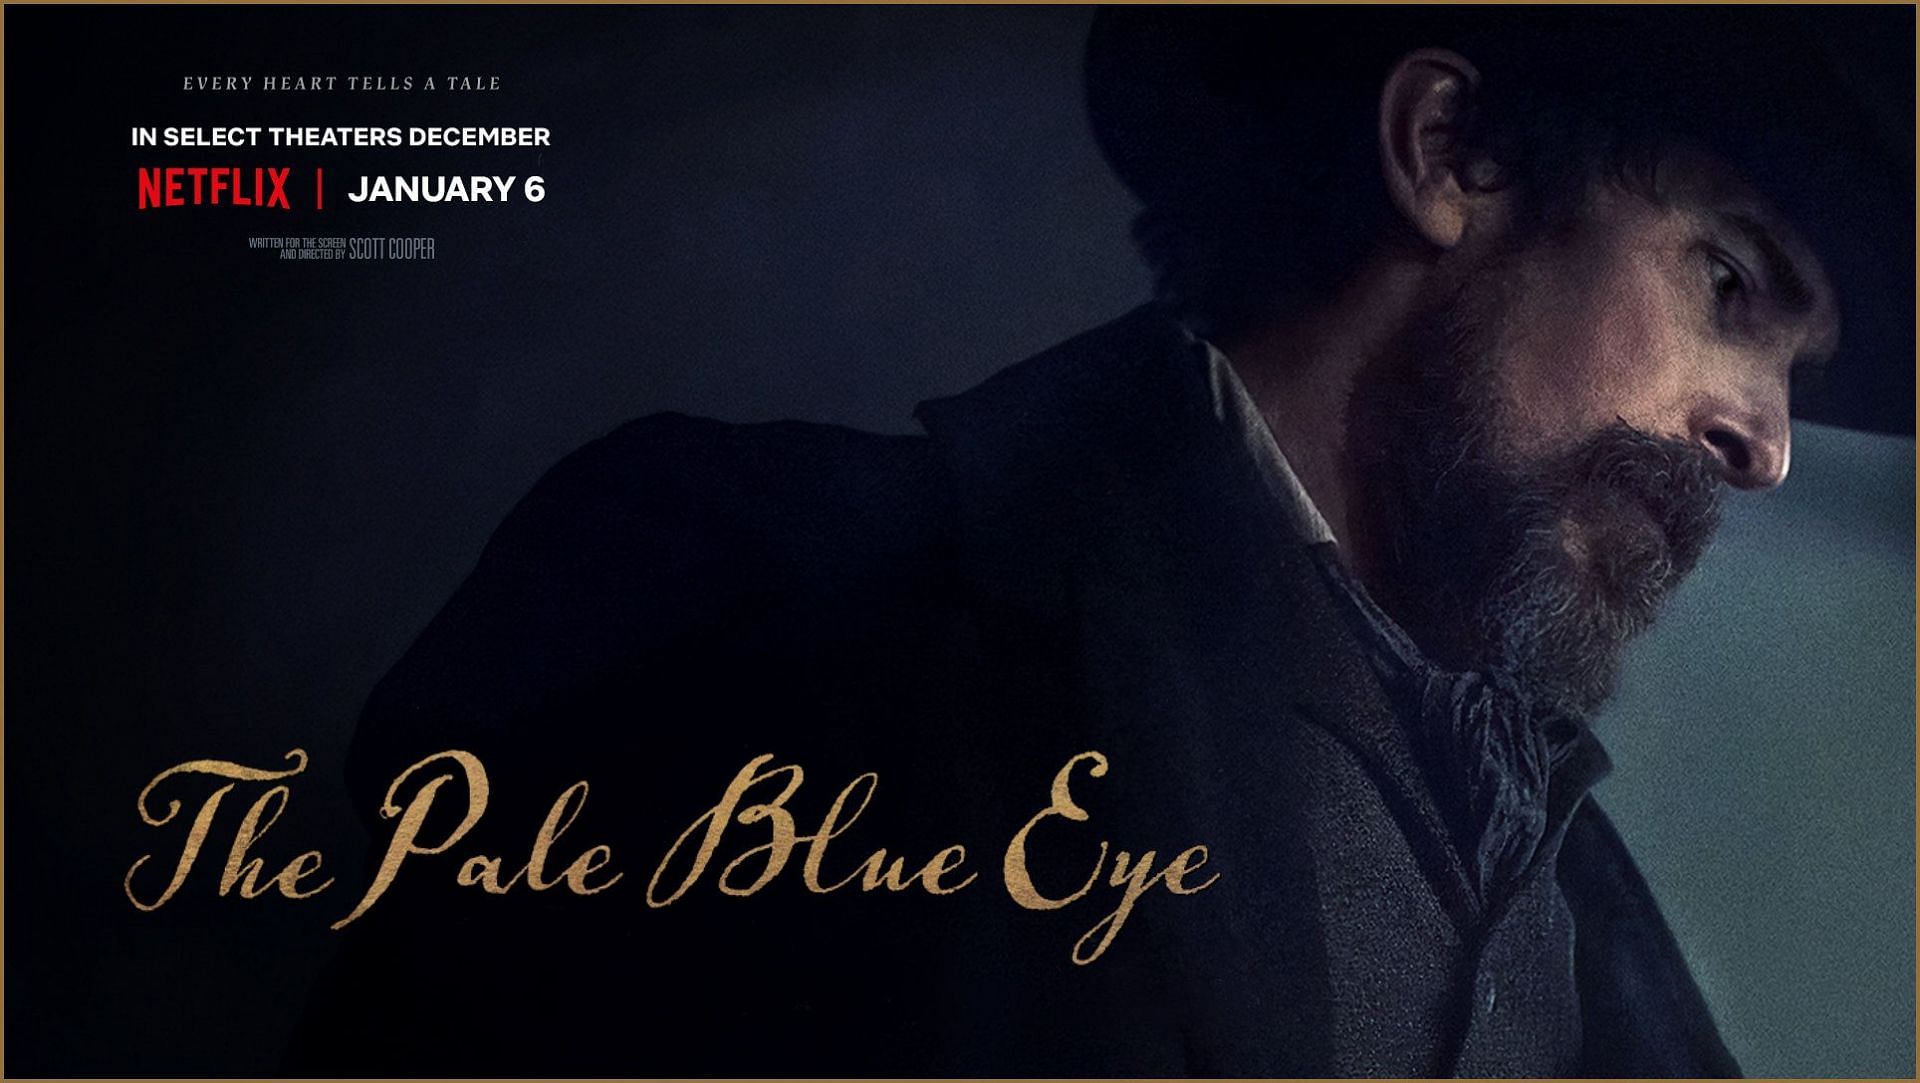 The Pale Blue Eye (Image via Netflix)